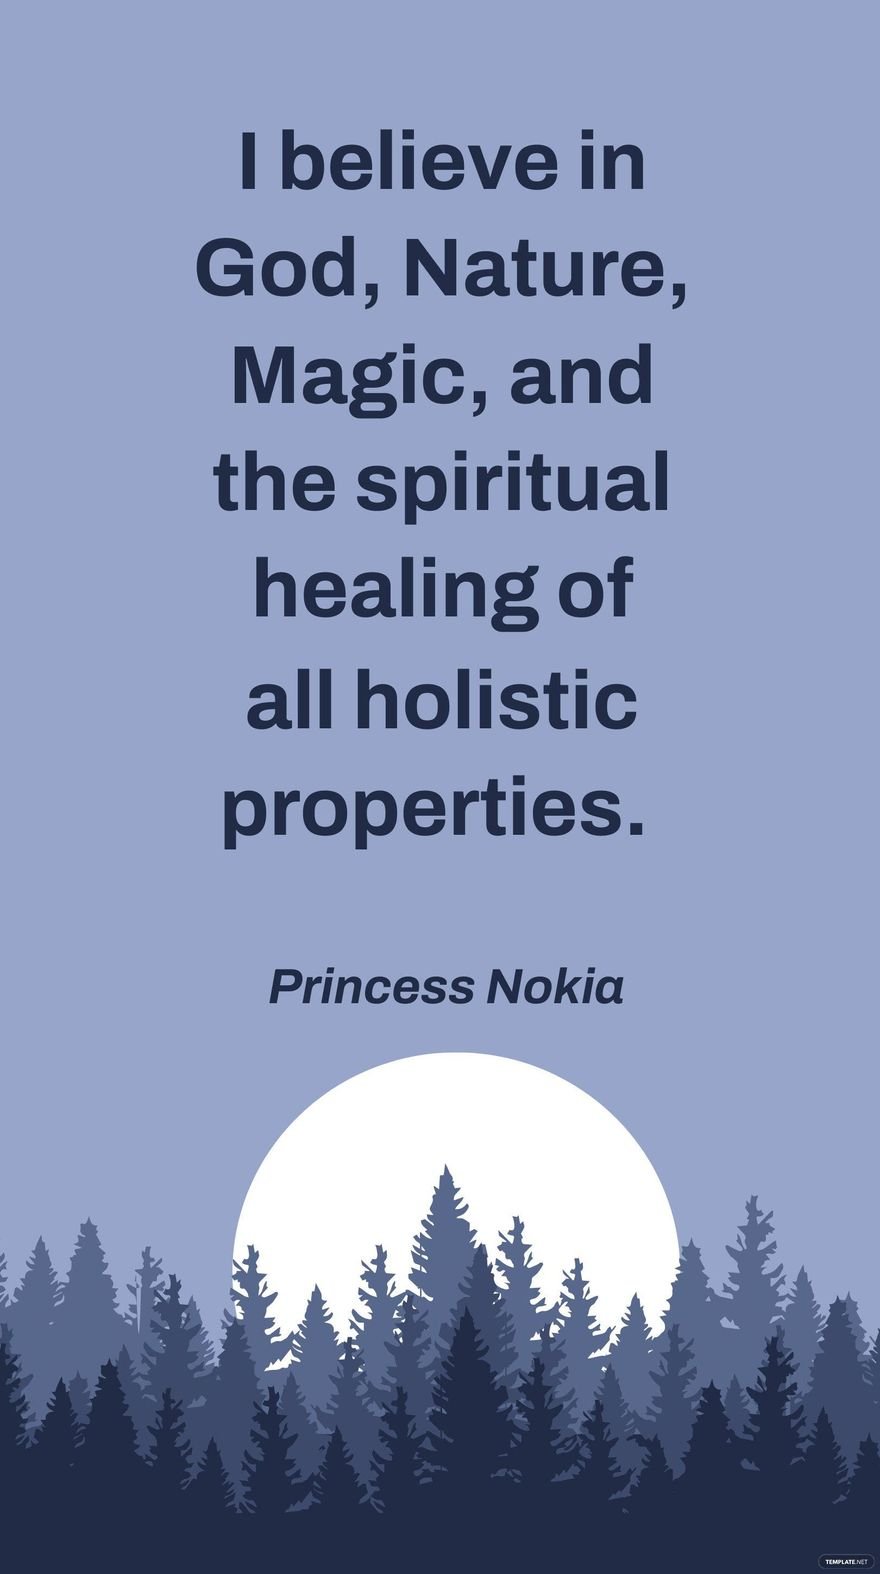 Princess Nokia - I believe in God, Nature, Magic, and the spiritual healing of all holistic properties.